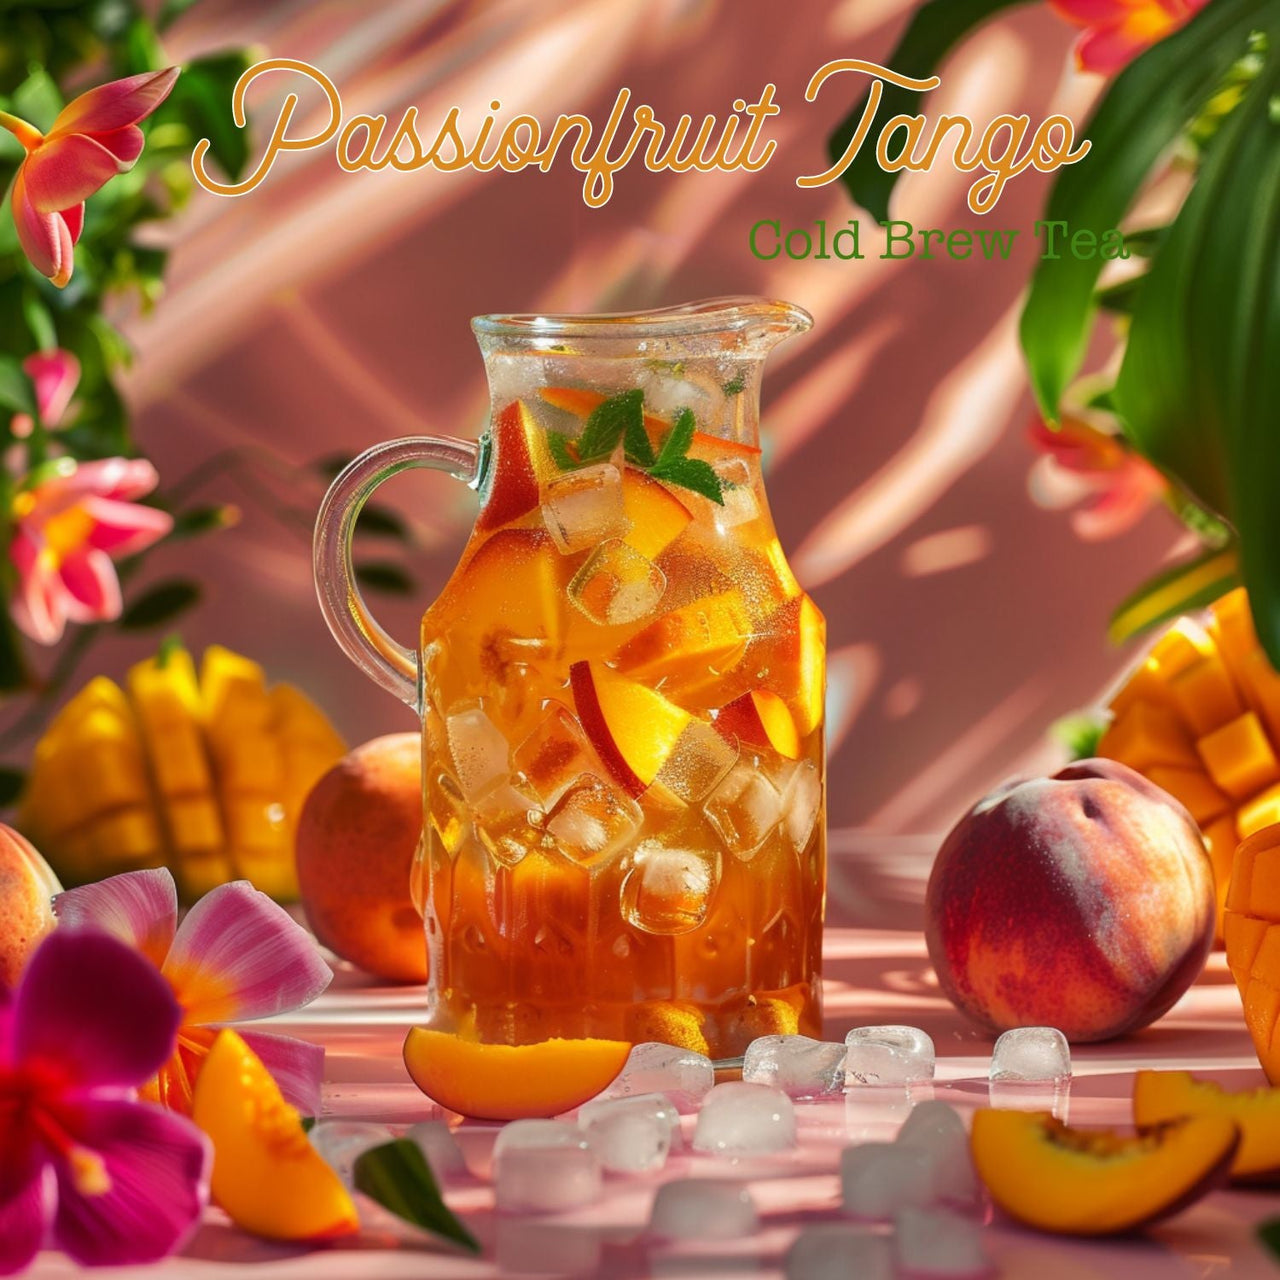 Passionfruit Tango Cold Brew Tea Pods - Java Momma